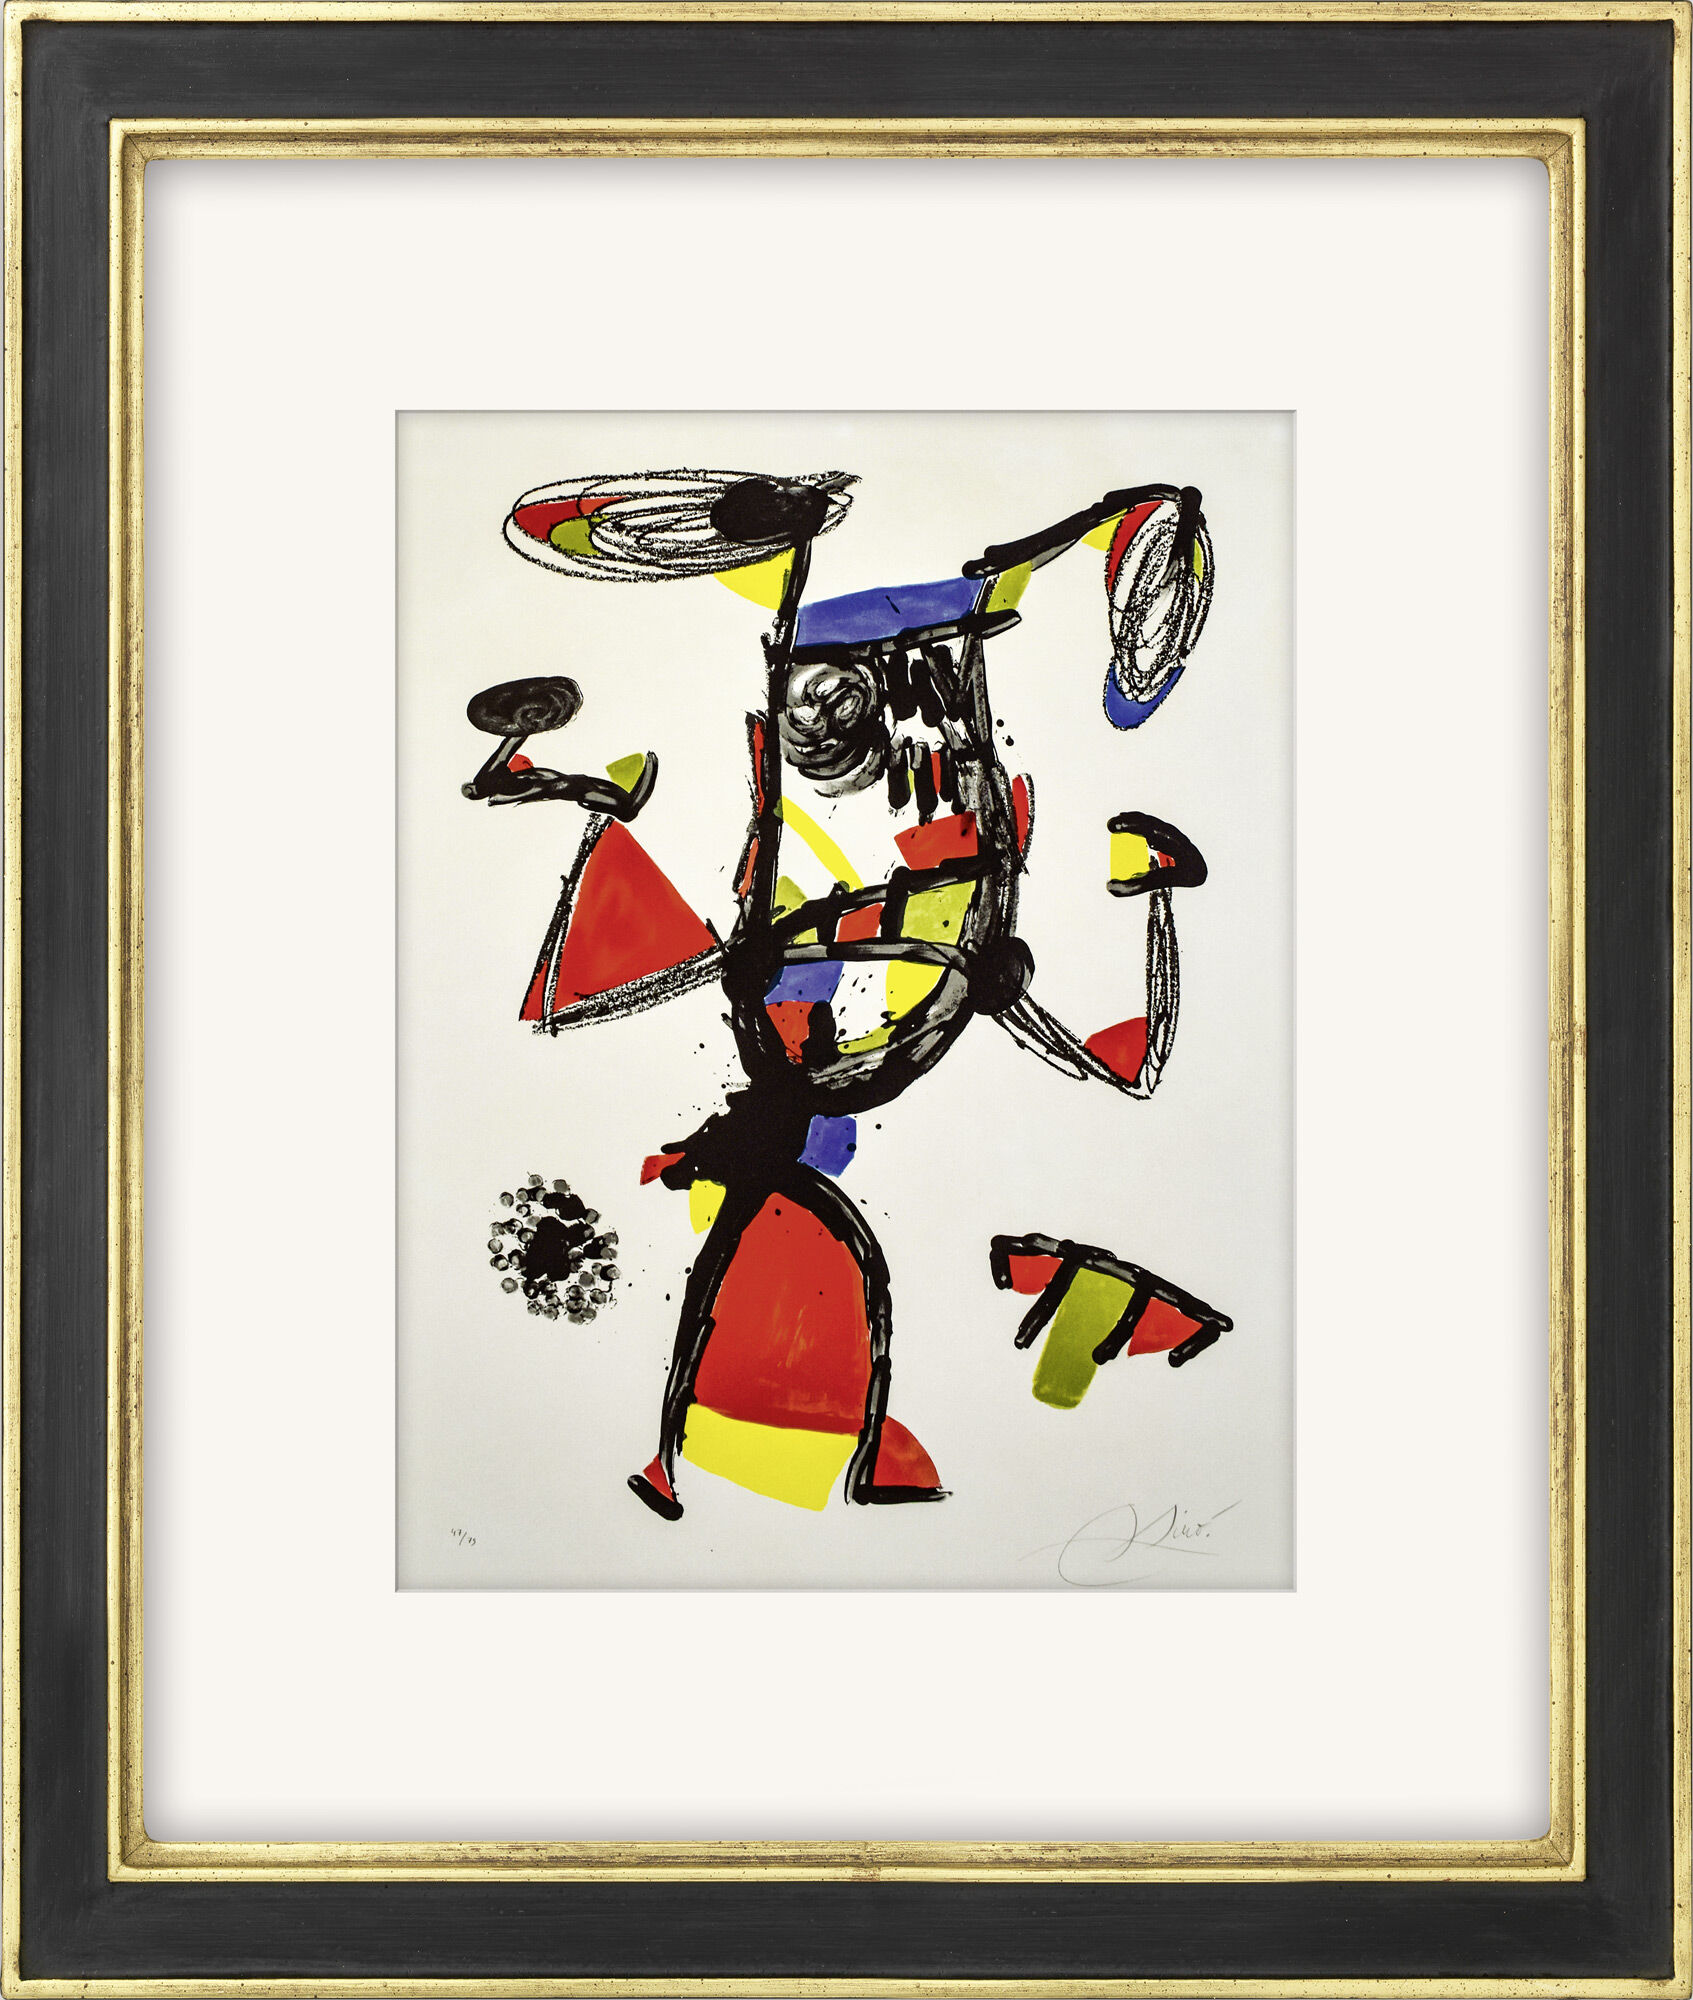 Billede "Majorette (Cheerleader)" (1978) von Joan Miró